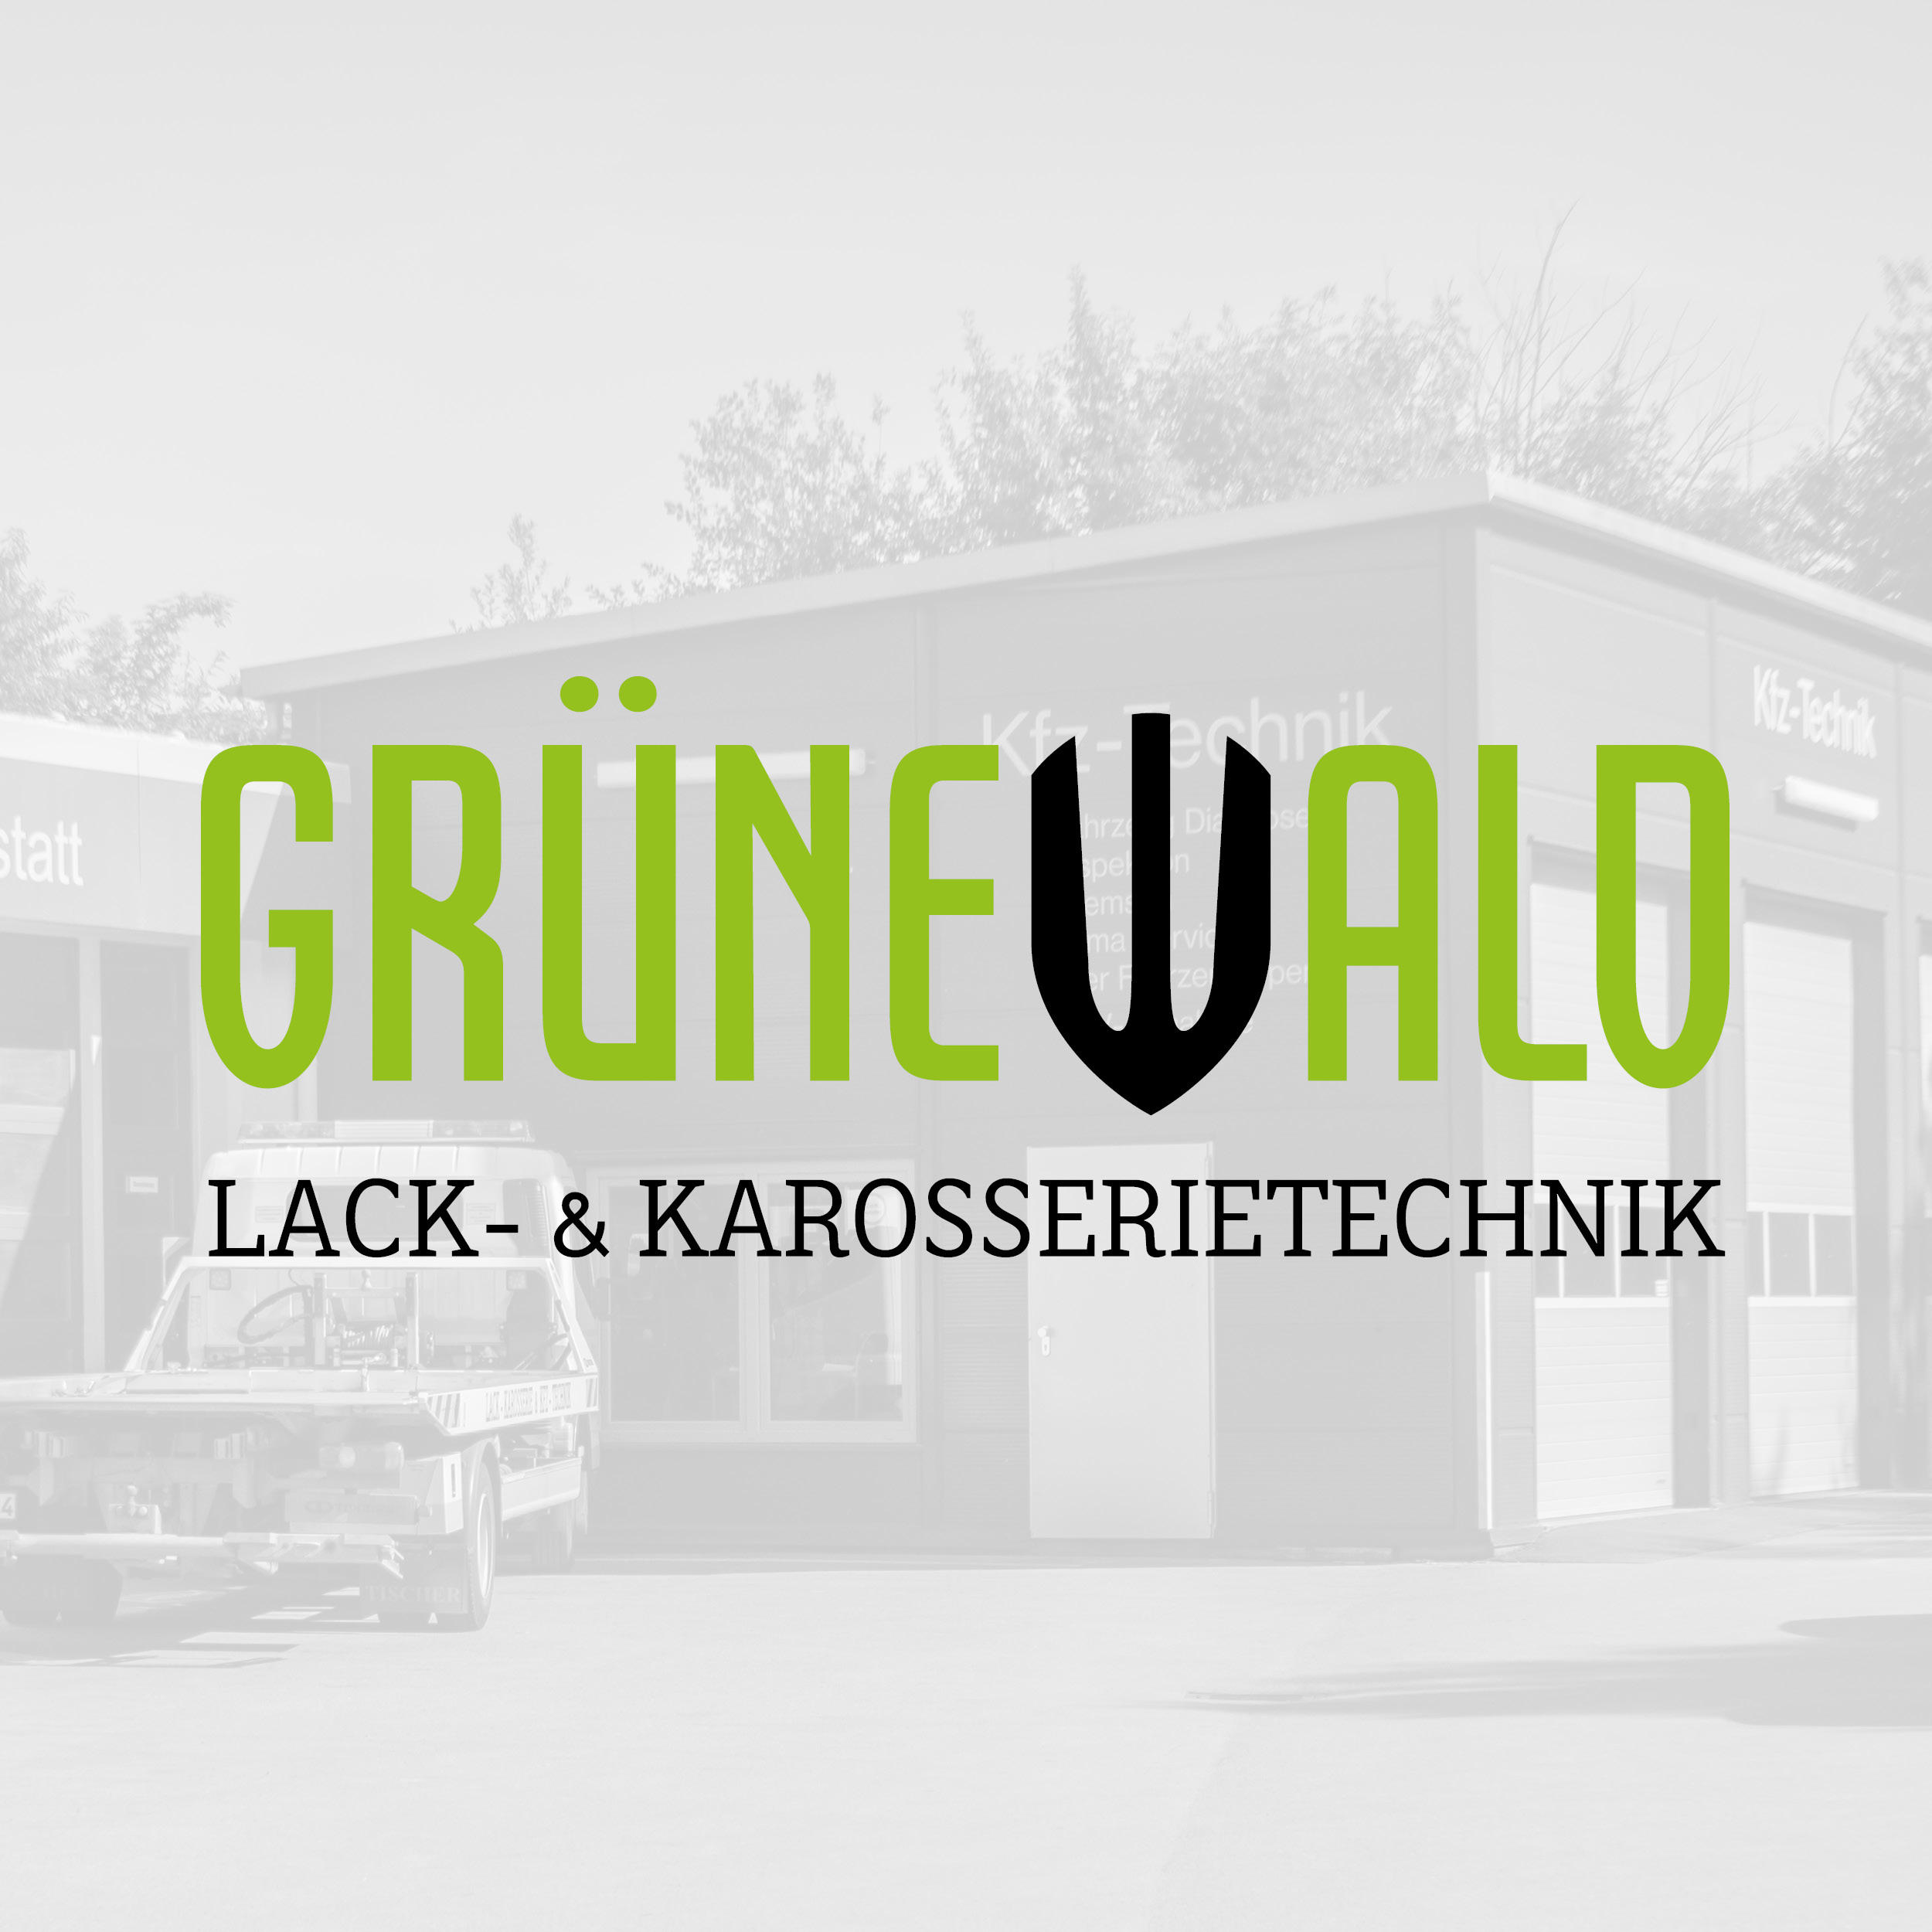 Lack- und Karosserietechnik Grünewald Maximilian Achenbach GmbH  